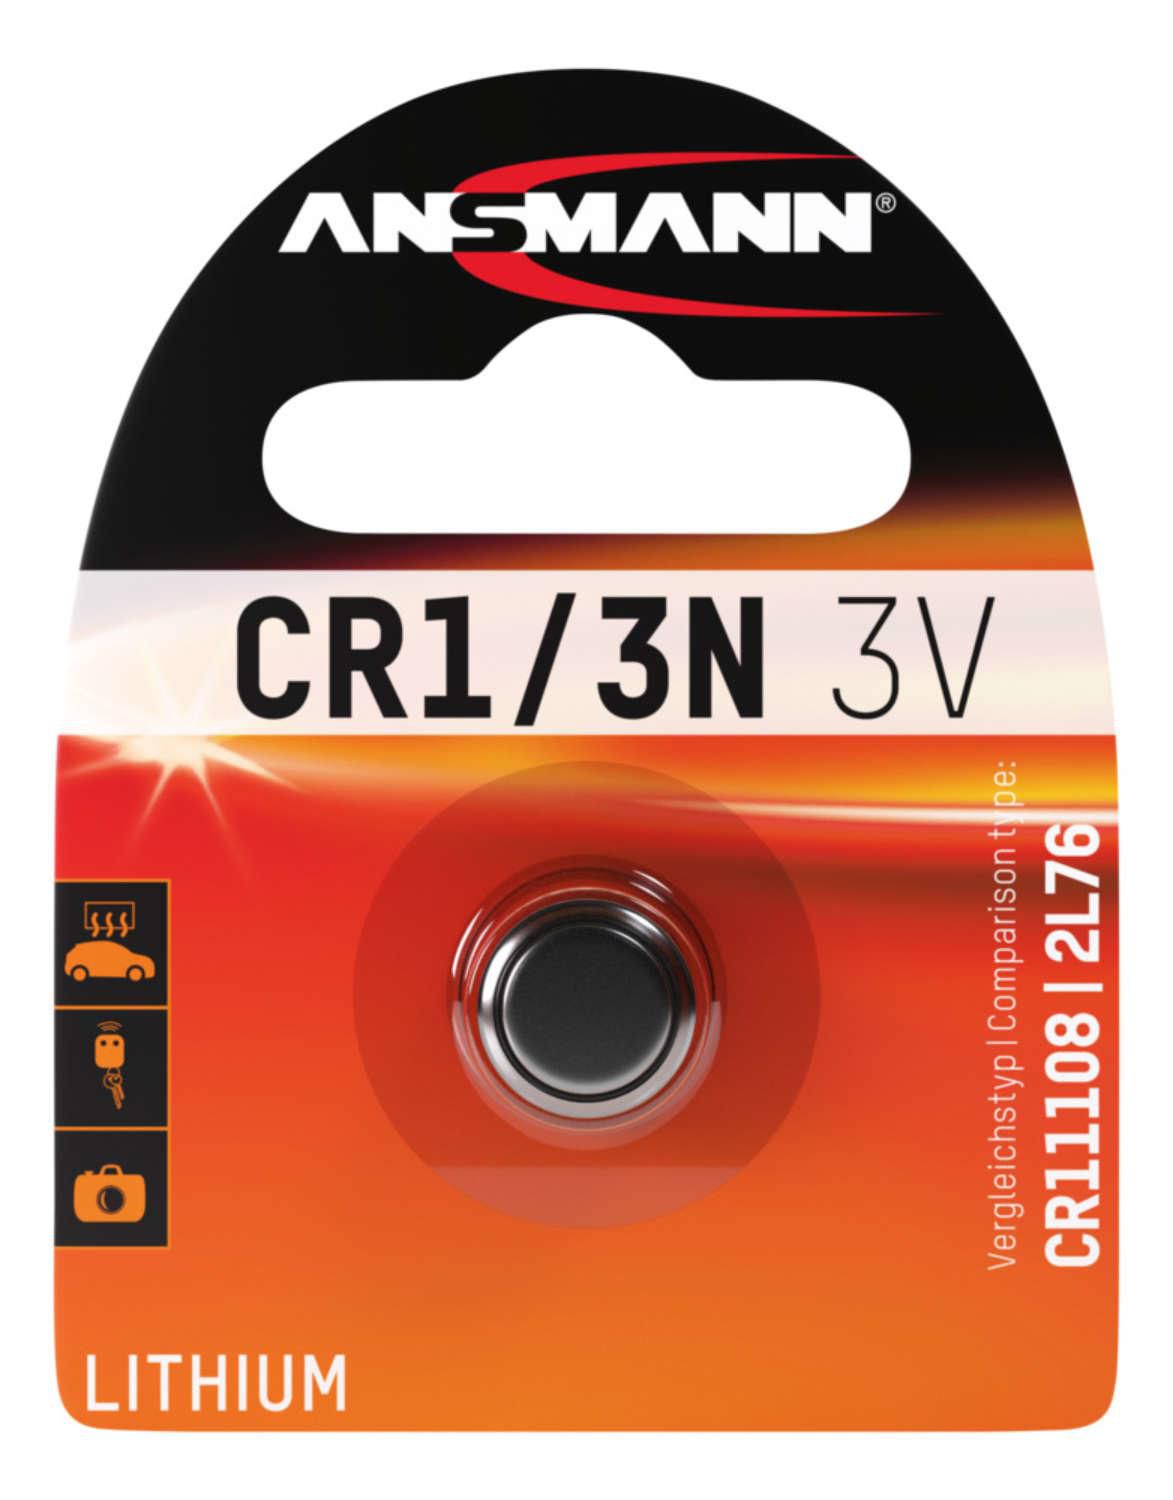 ANSMANN 1516-0097 W128780203 Lithium Battery Single-Use 